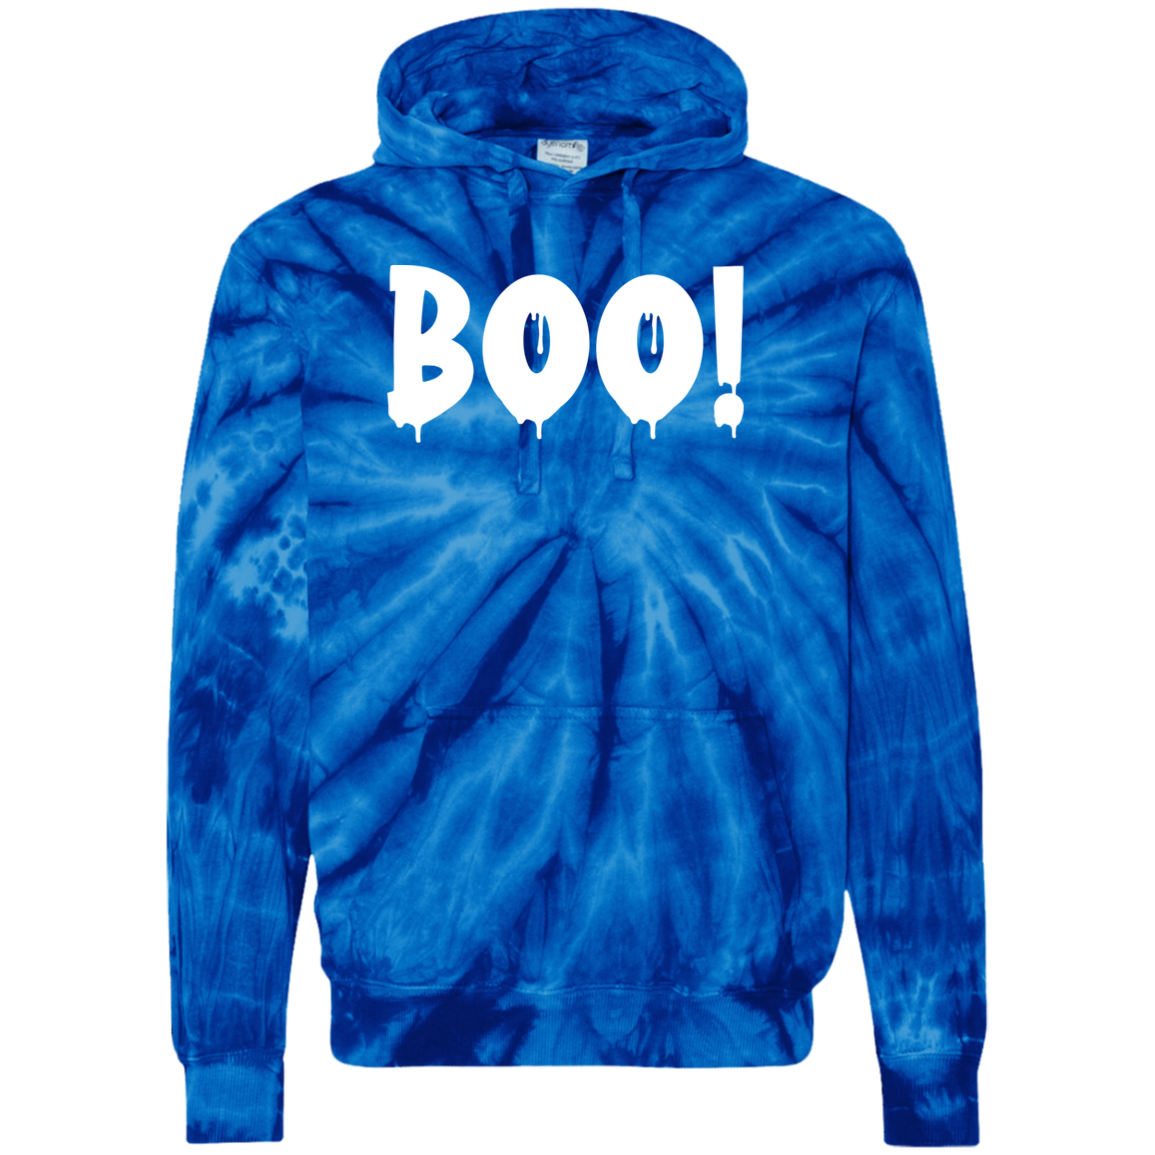 Halloween "Boo!" Unisex Tie-Dyed Hoodie